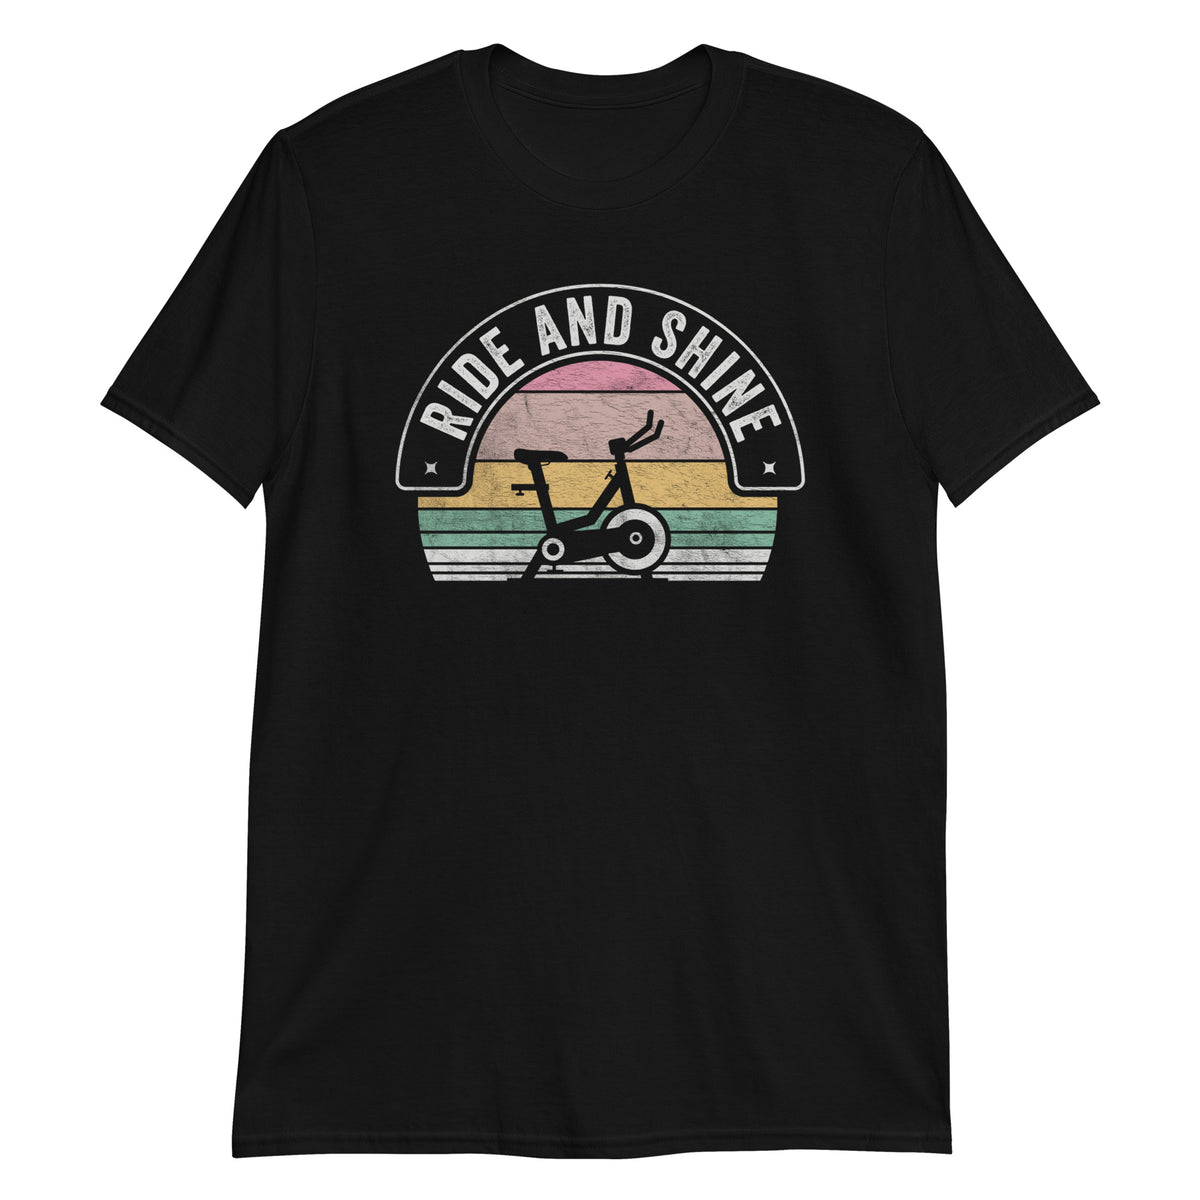 Ride and Shine T-Shirt